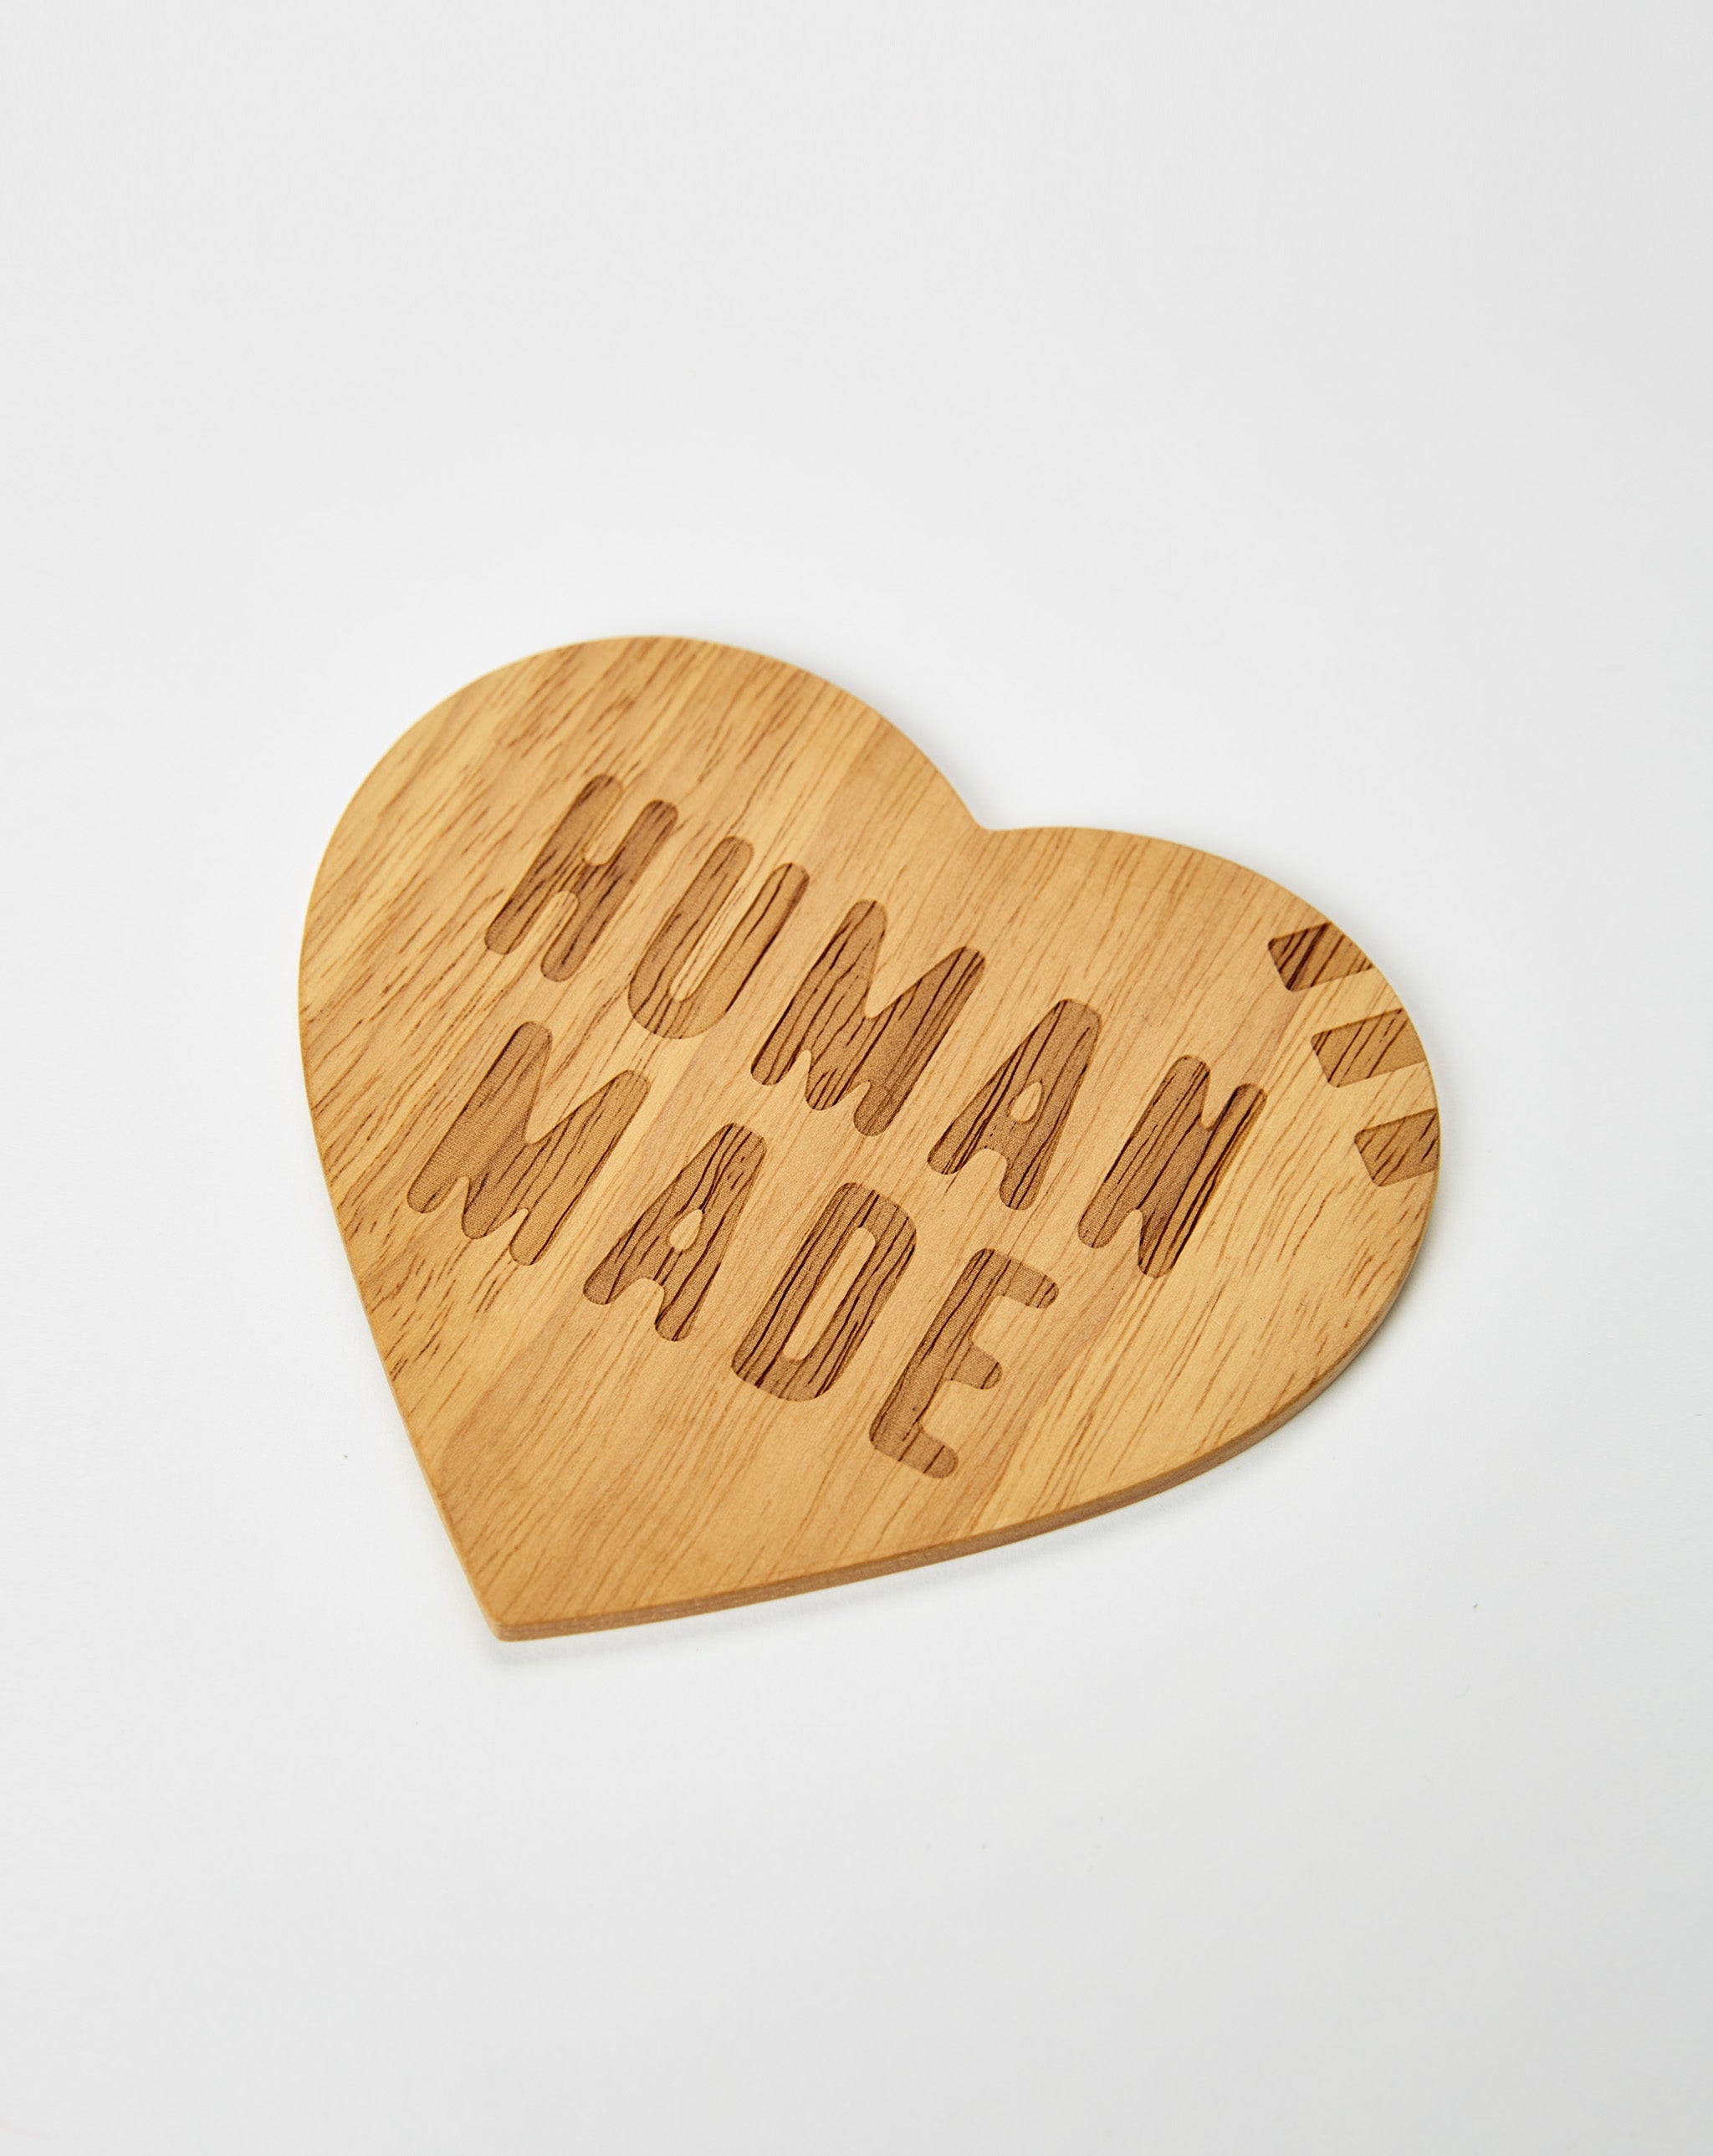 Human Made Heart Wood Coaster Set  - XHIBITION